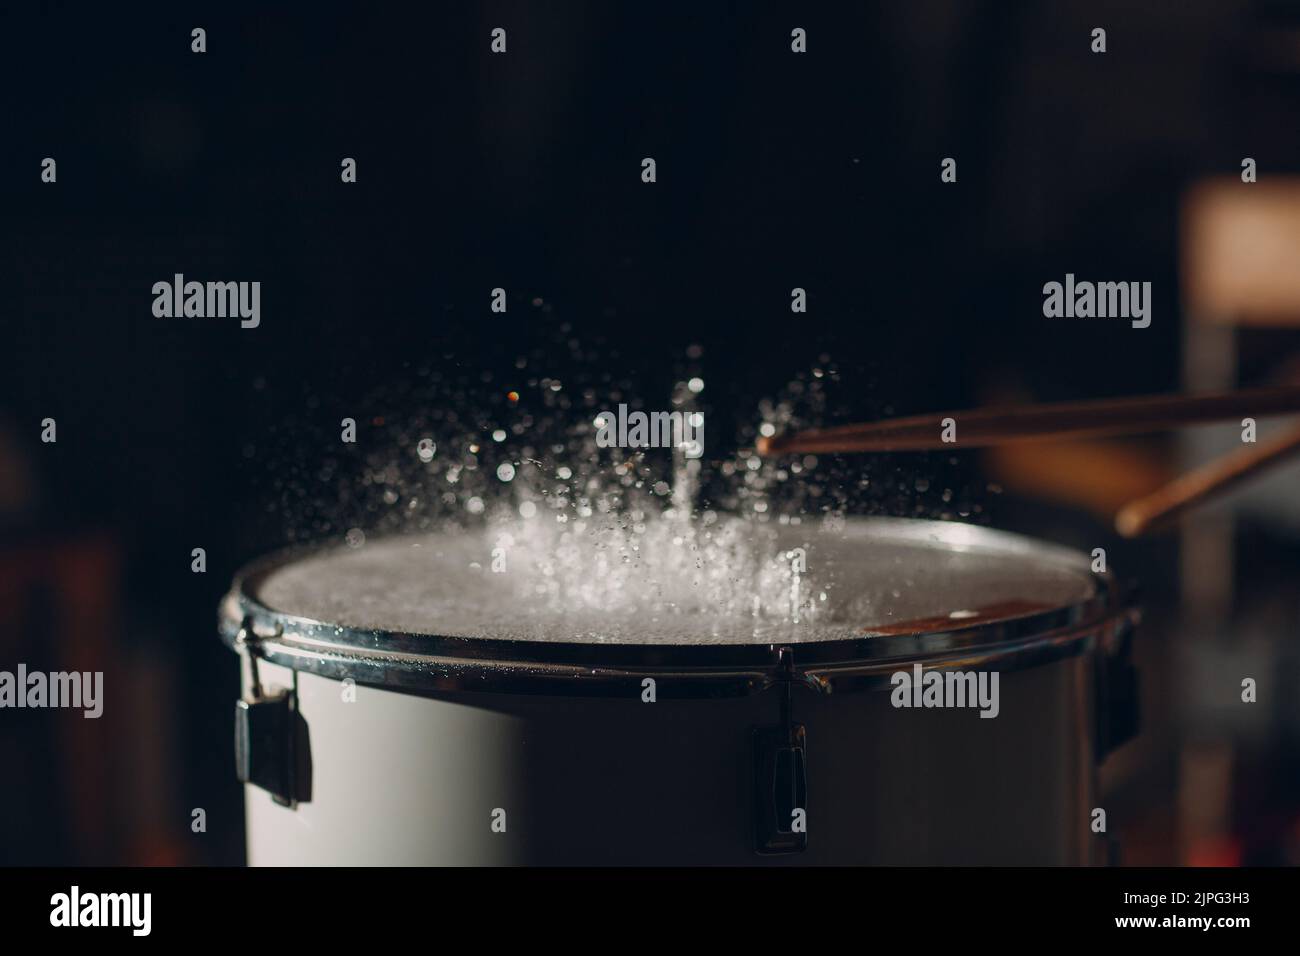 Close up drum sticks drumming hit beat rhythm on drum surface with splash water drops Stock Photo